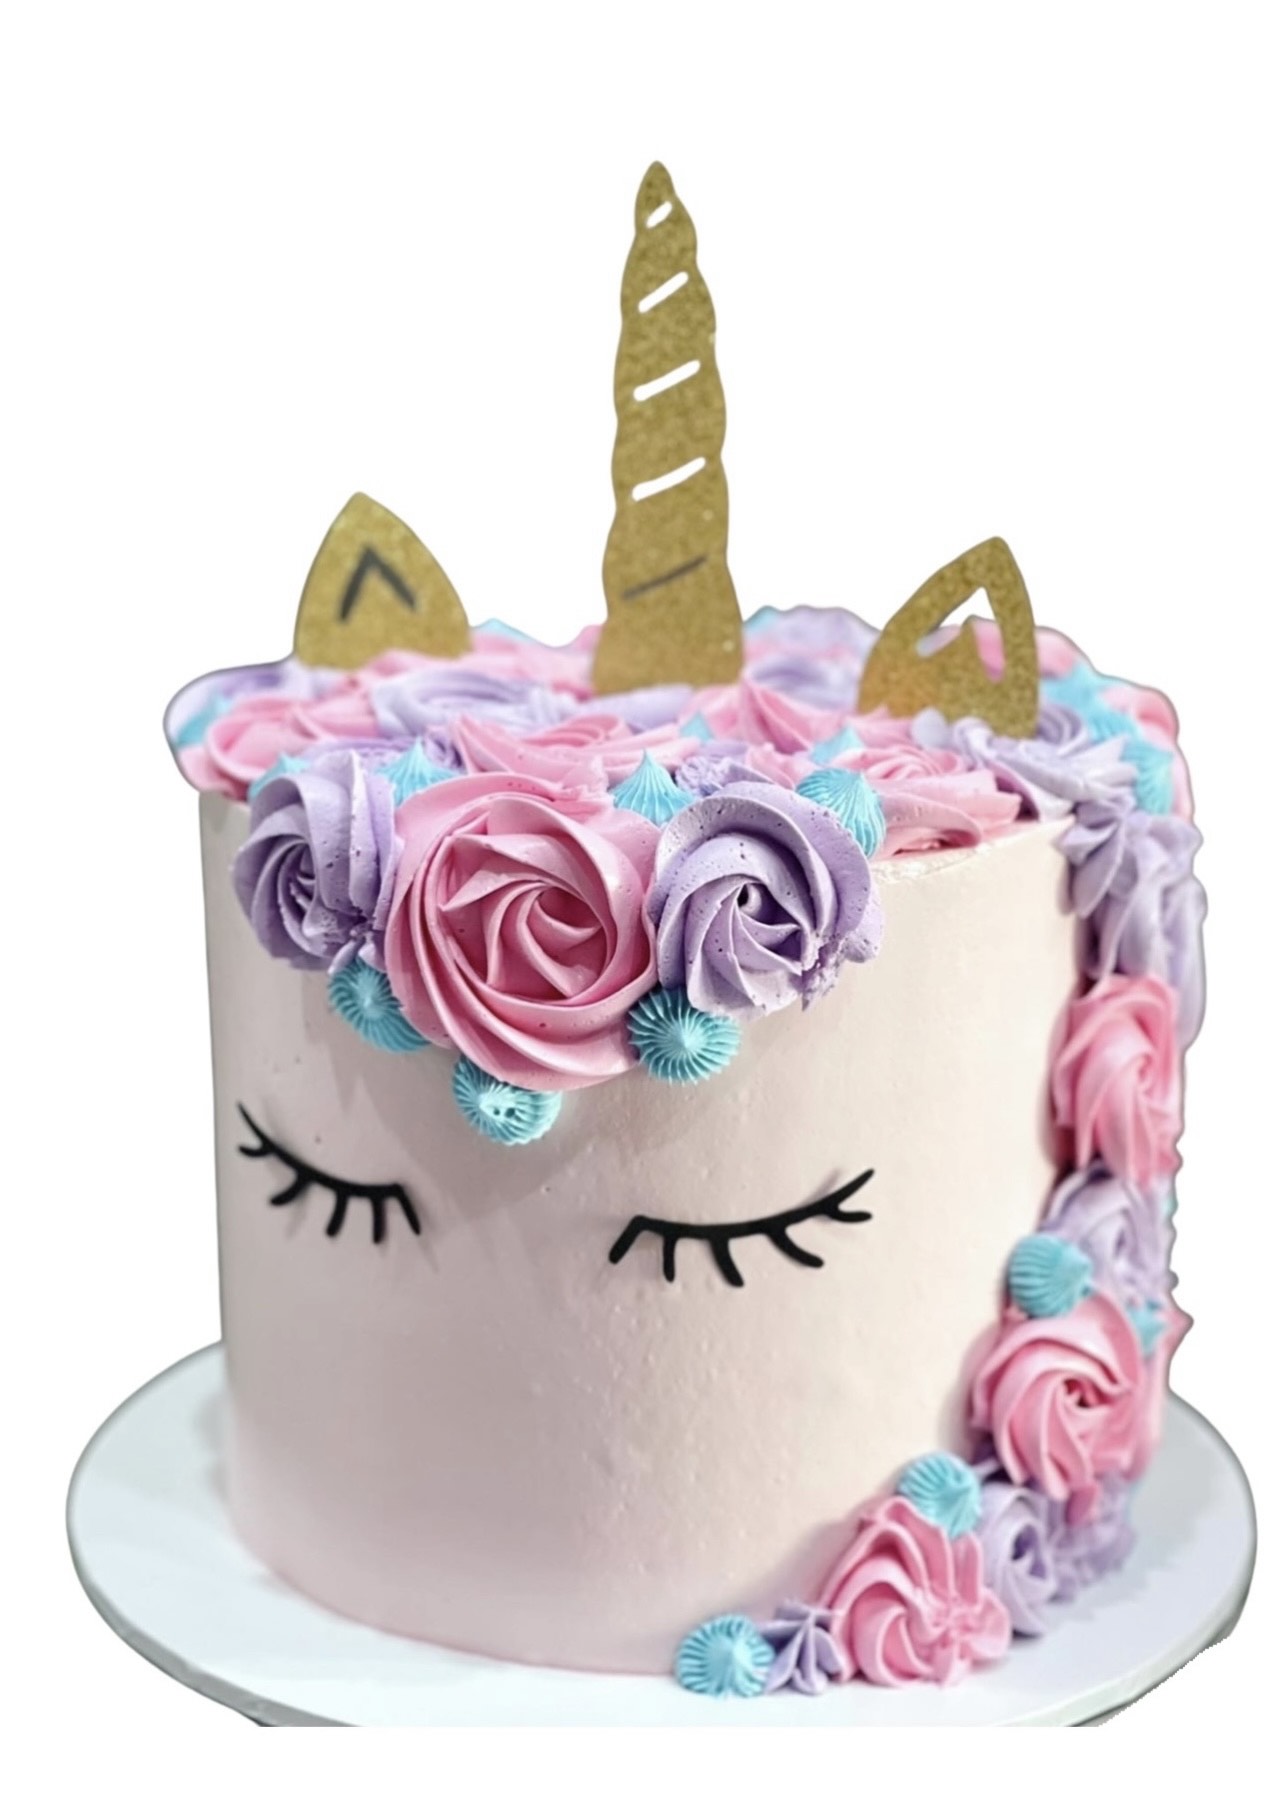 Mom upset after bakery botches unicorn birthday cake | wthr.com